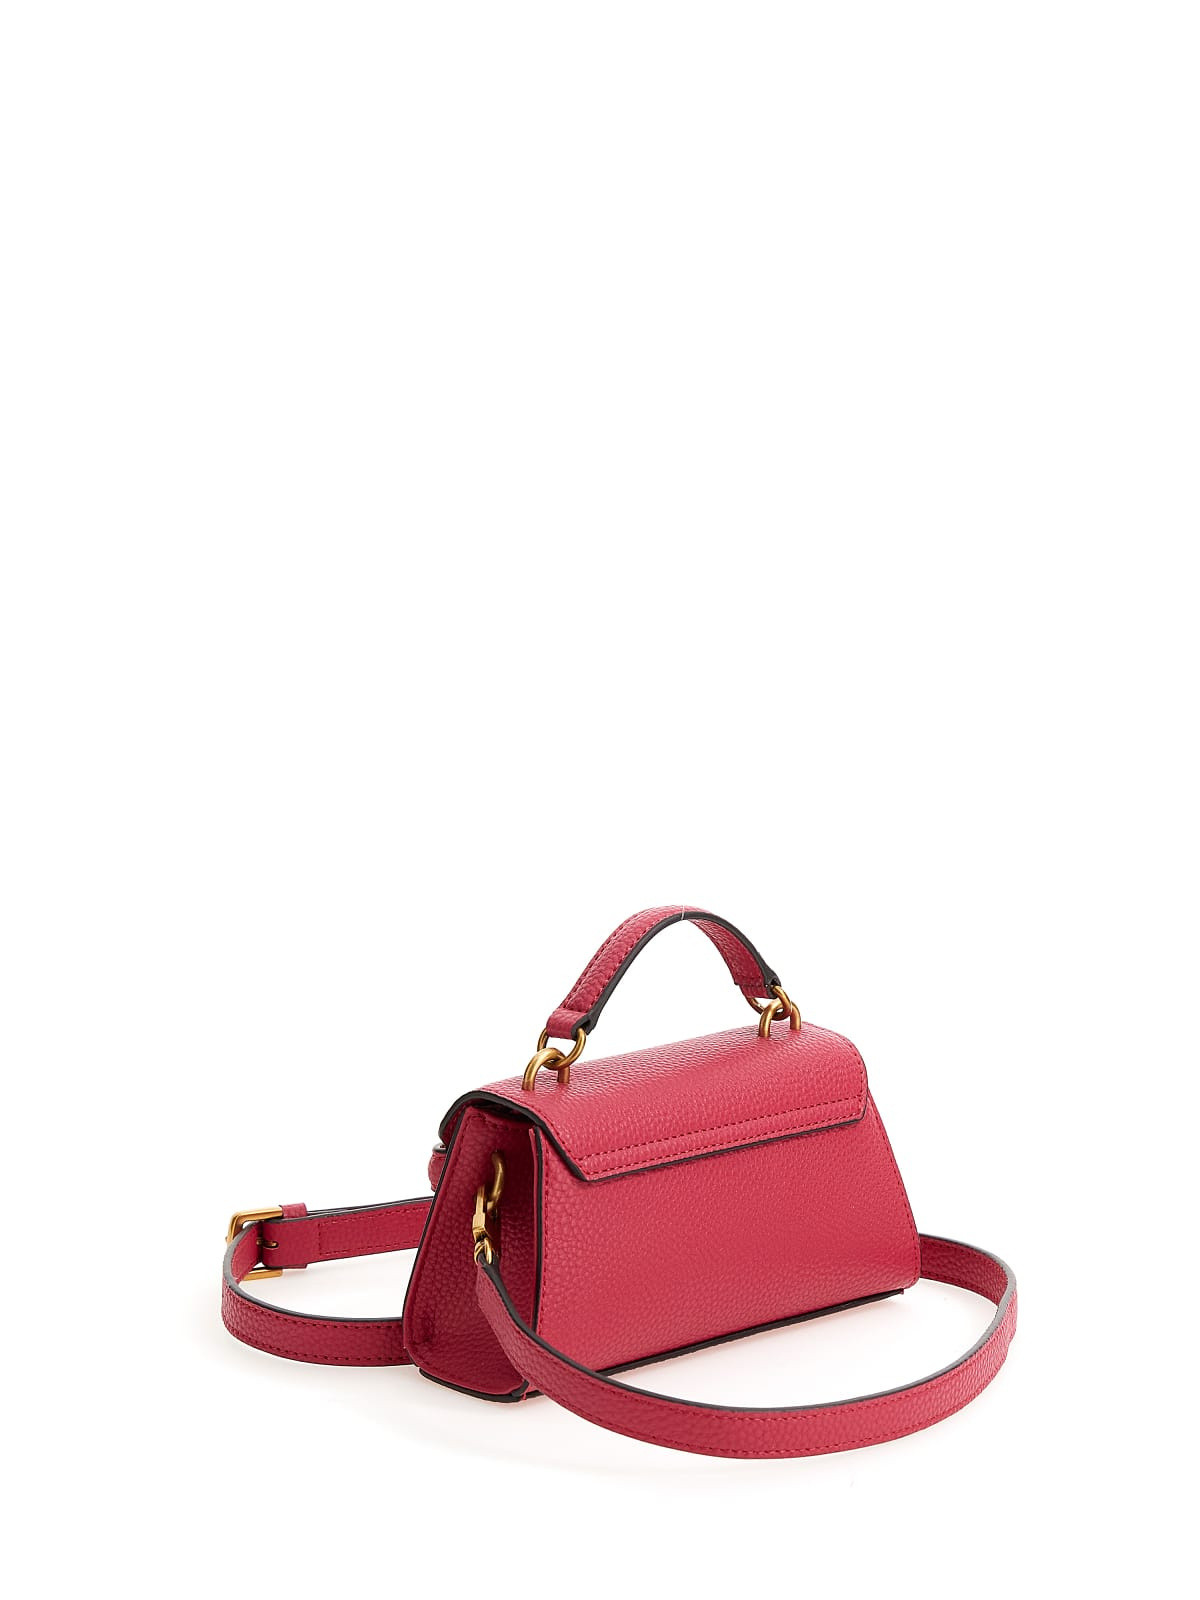 Hand bag with shoulder strap and charm, Pink, large image number 1